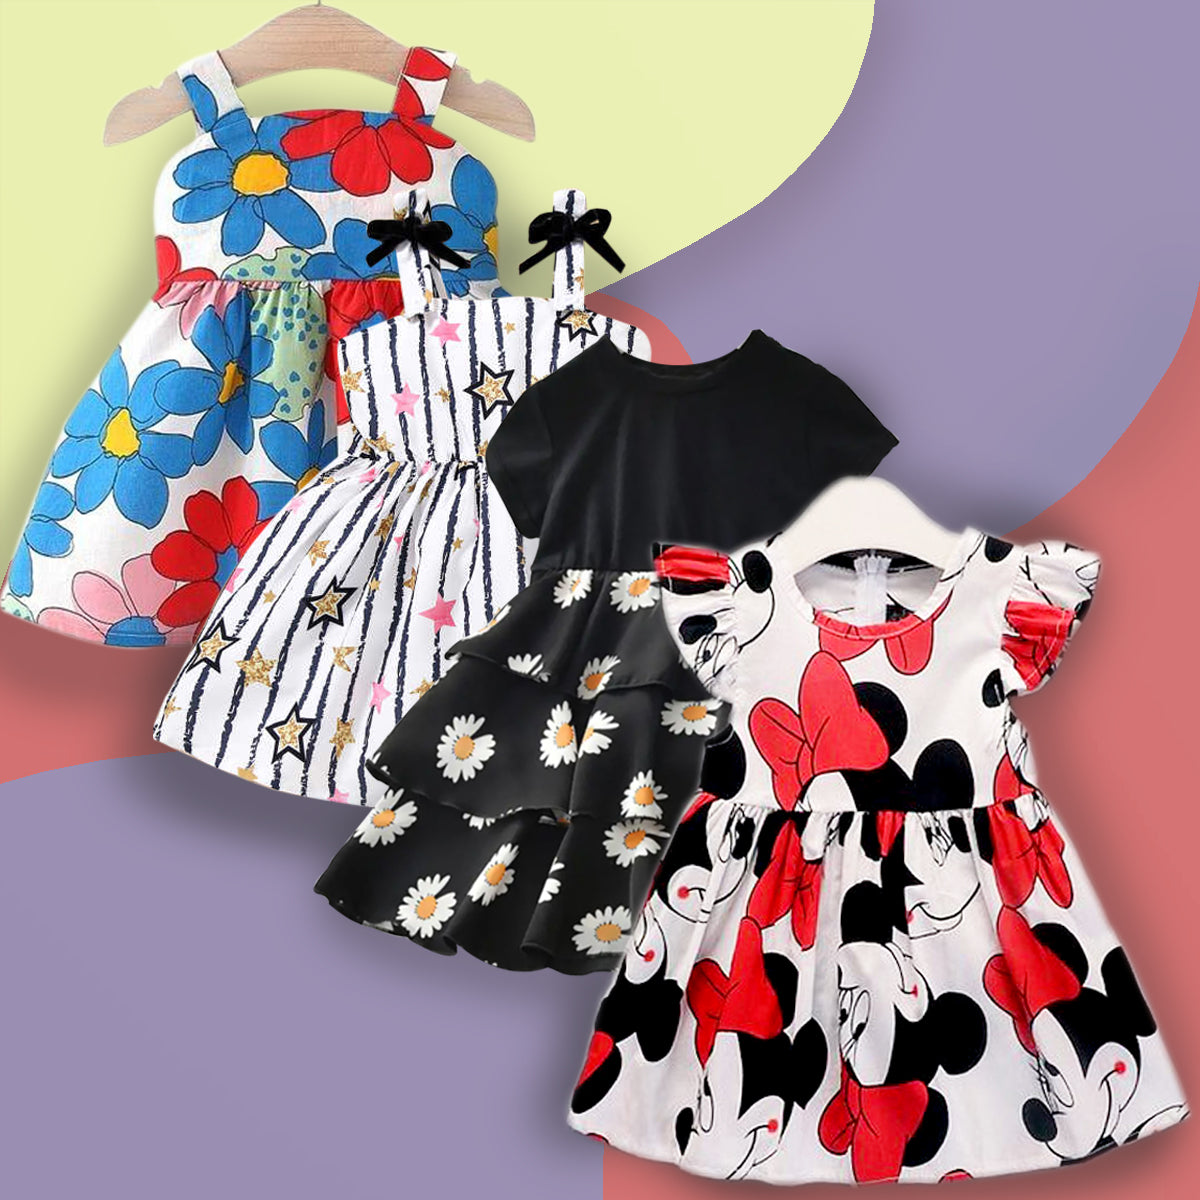 Venutaloza Toddler Girls Cotton Stylish Dresses_Frocks ( Combo Pack Of 4 ) for Baby Girls.